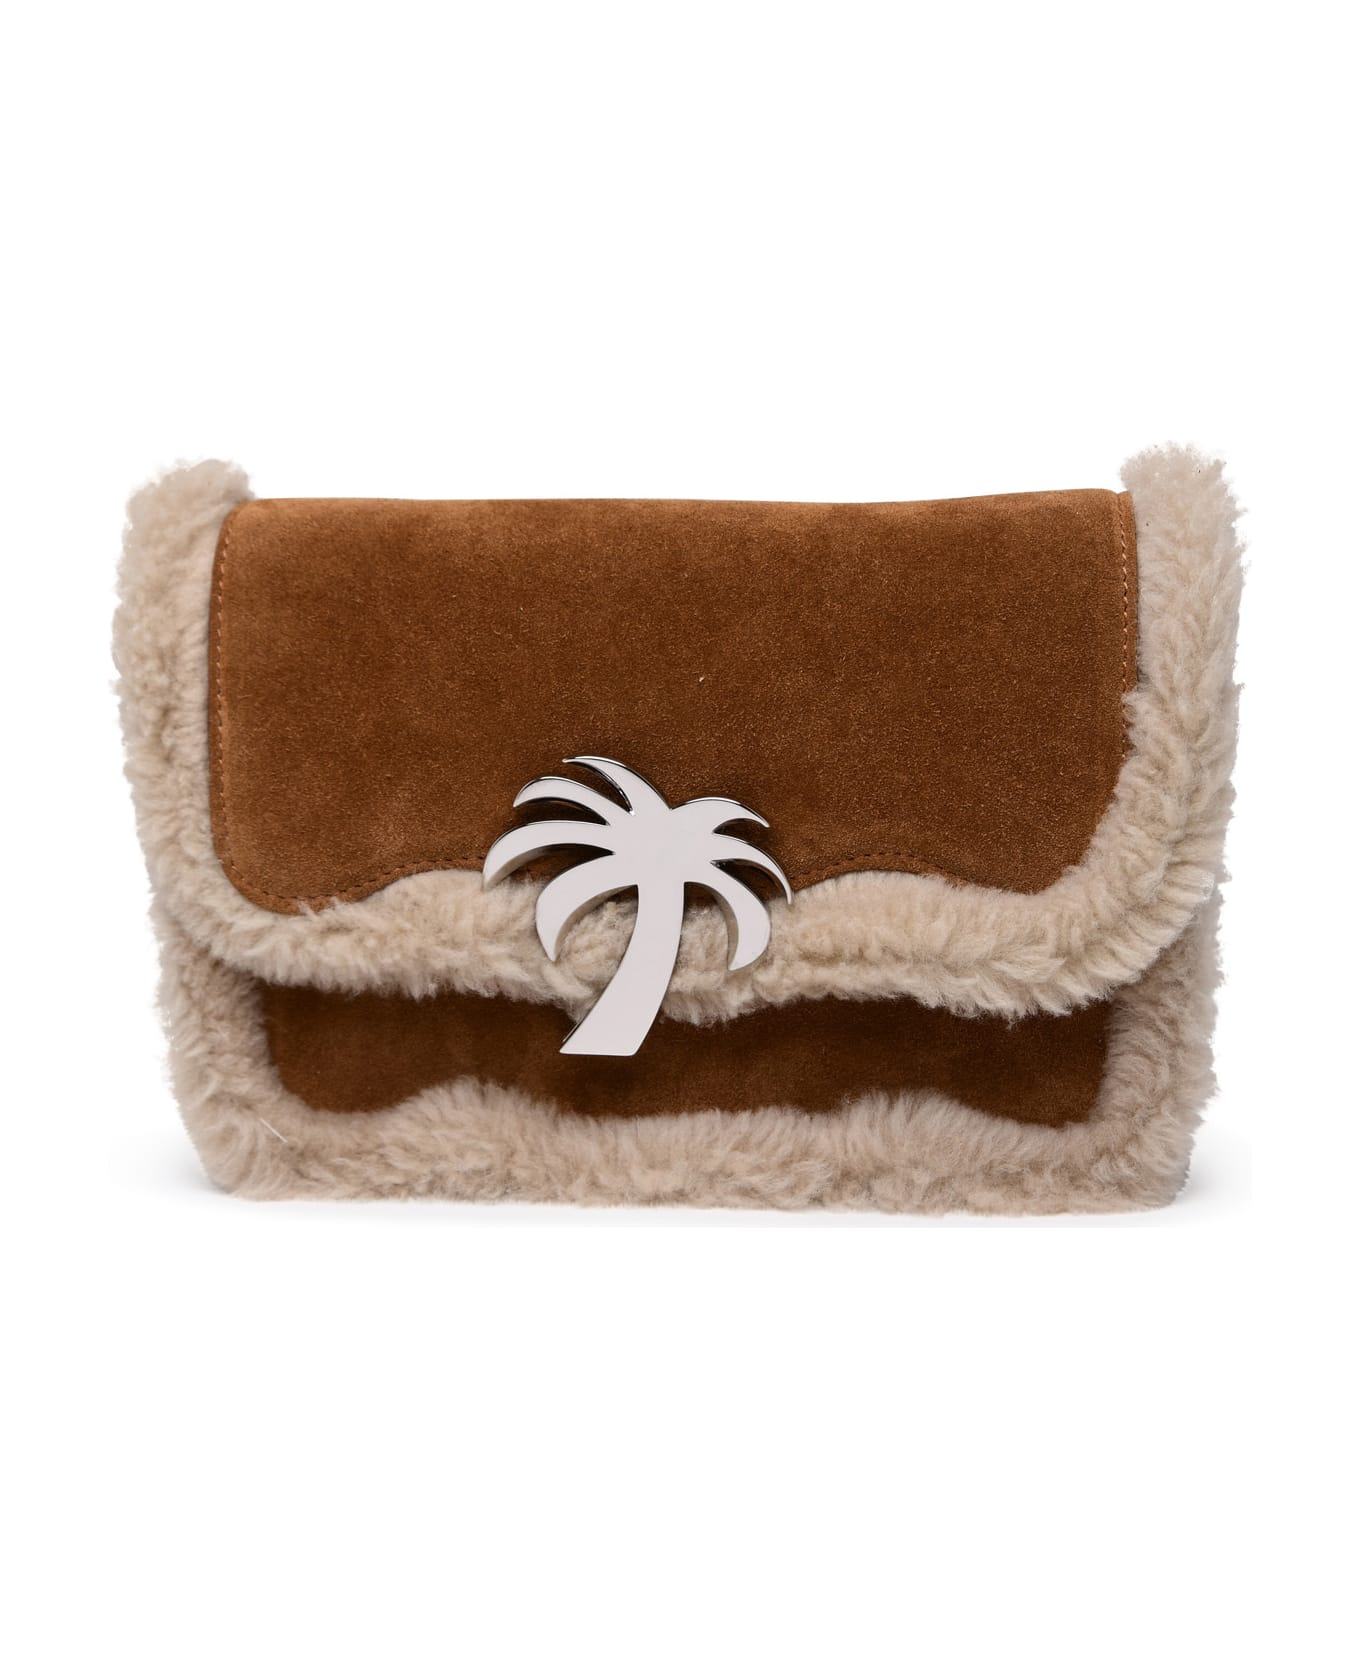 Palm Angels 'palm Beach' Bag In Beige Suede - Brown ショルダーバッグ